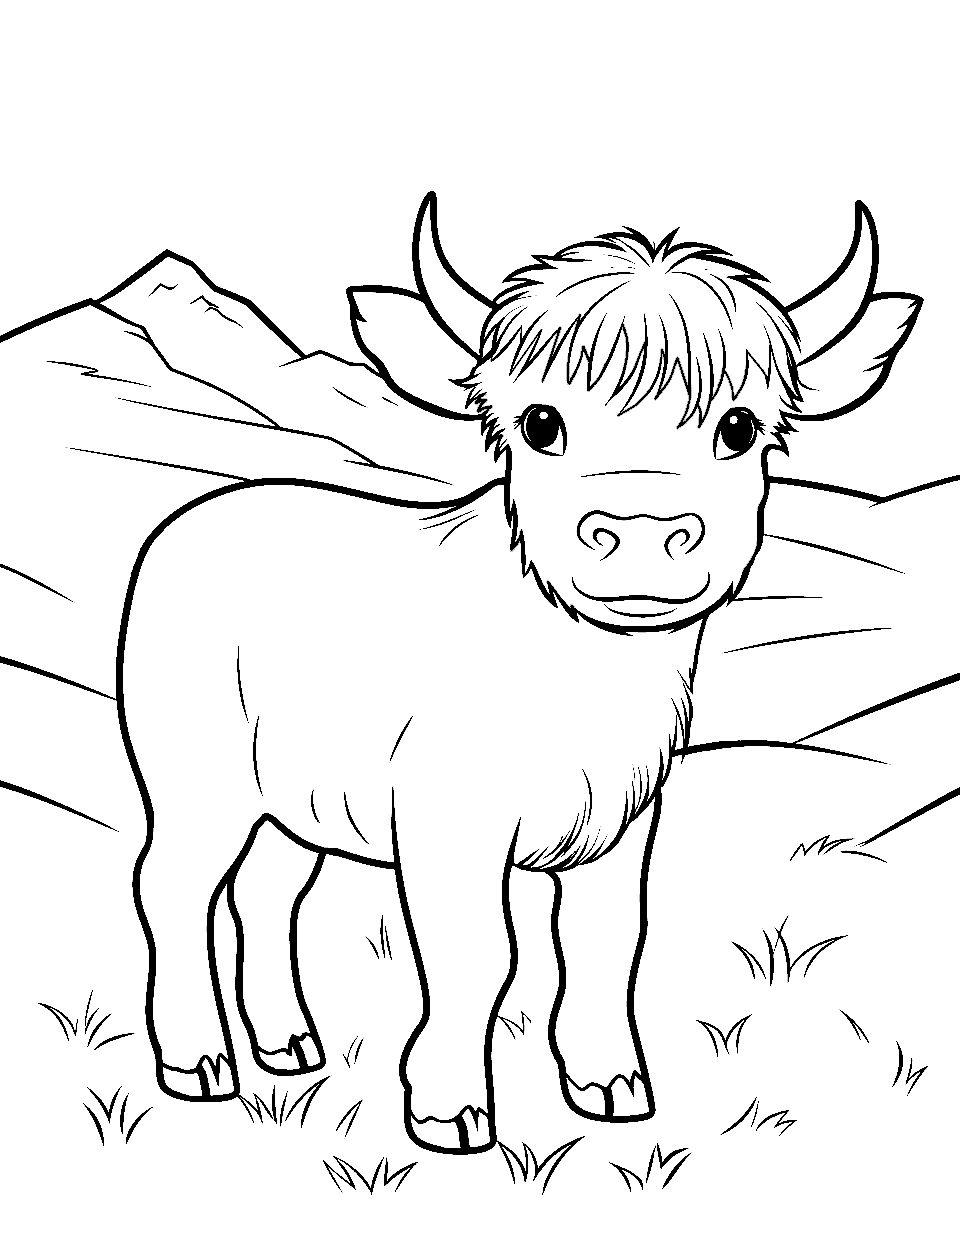 Highland Calf Adventure Coloring Page - A fluffy highland calf merrily hopping through a soft hillside.